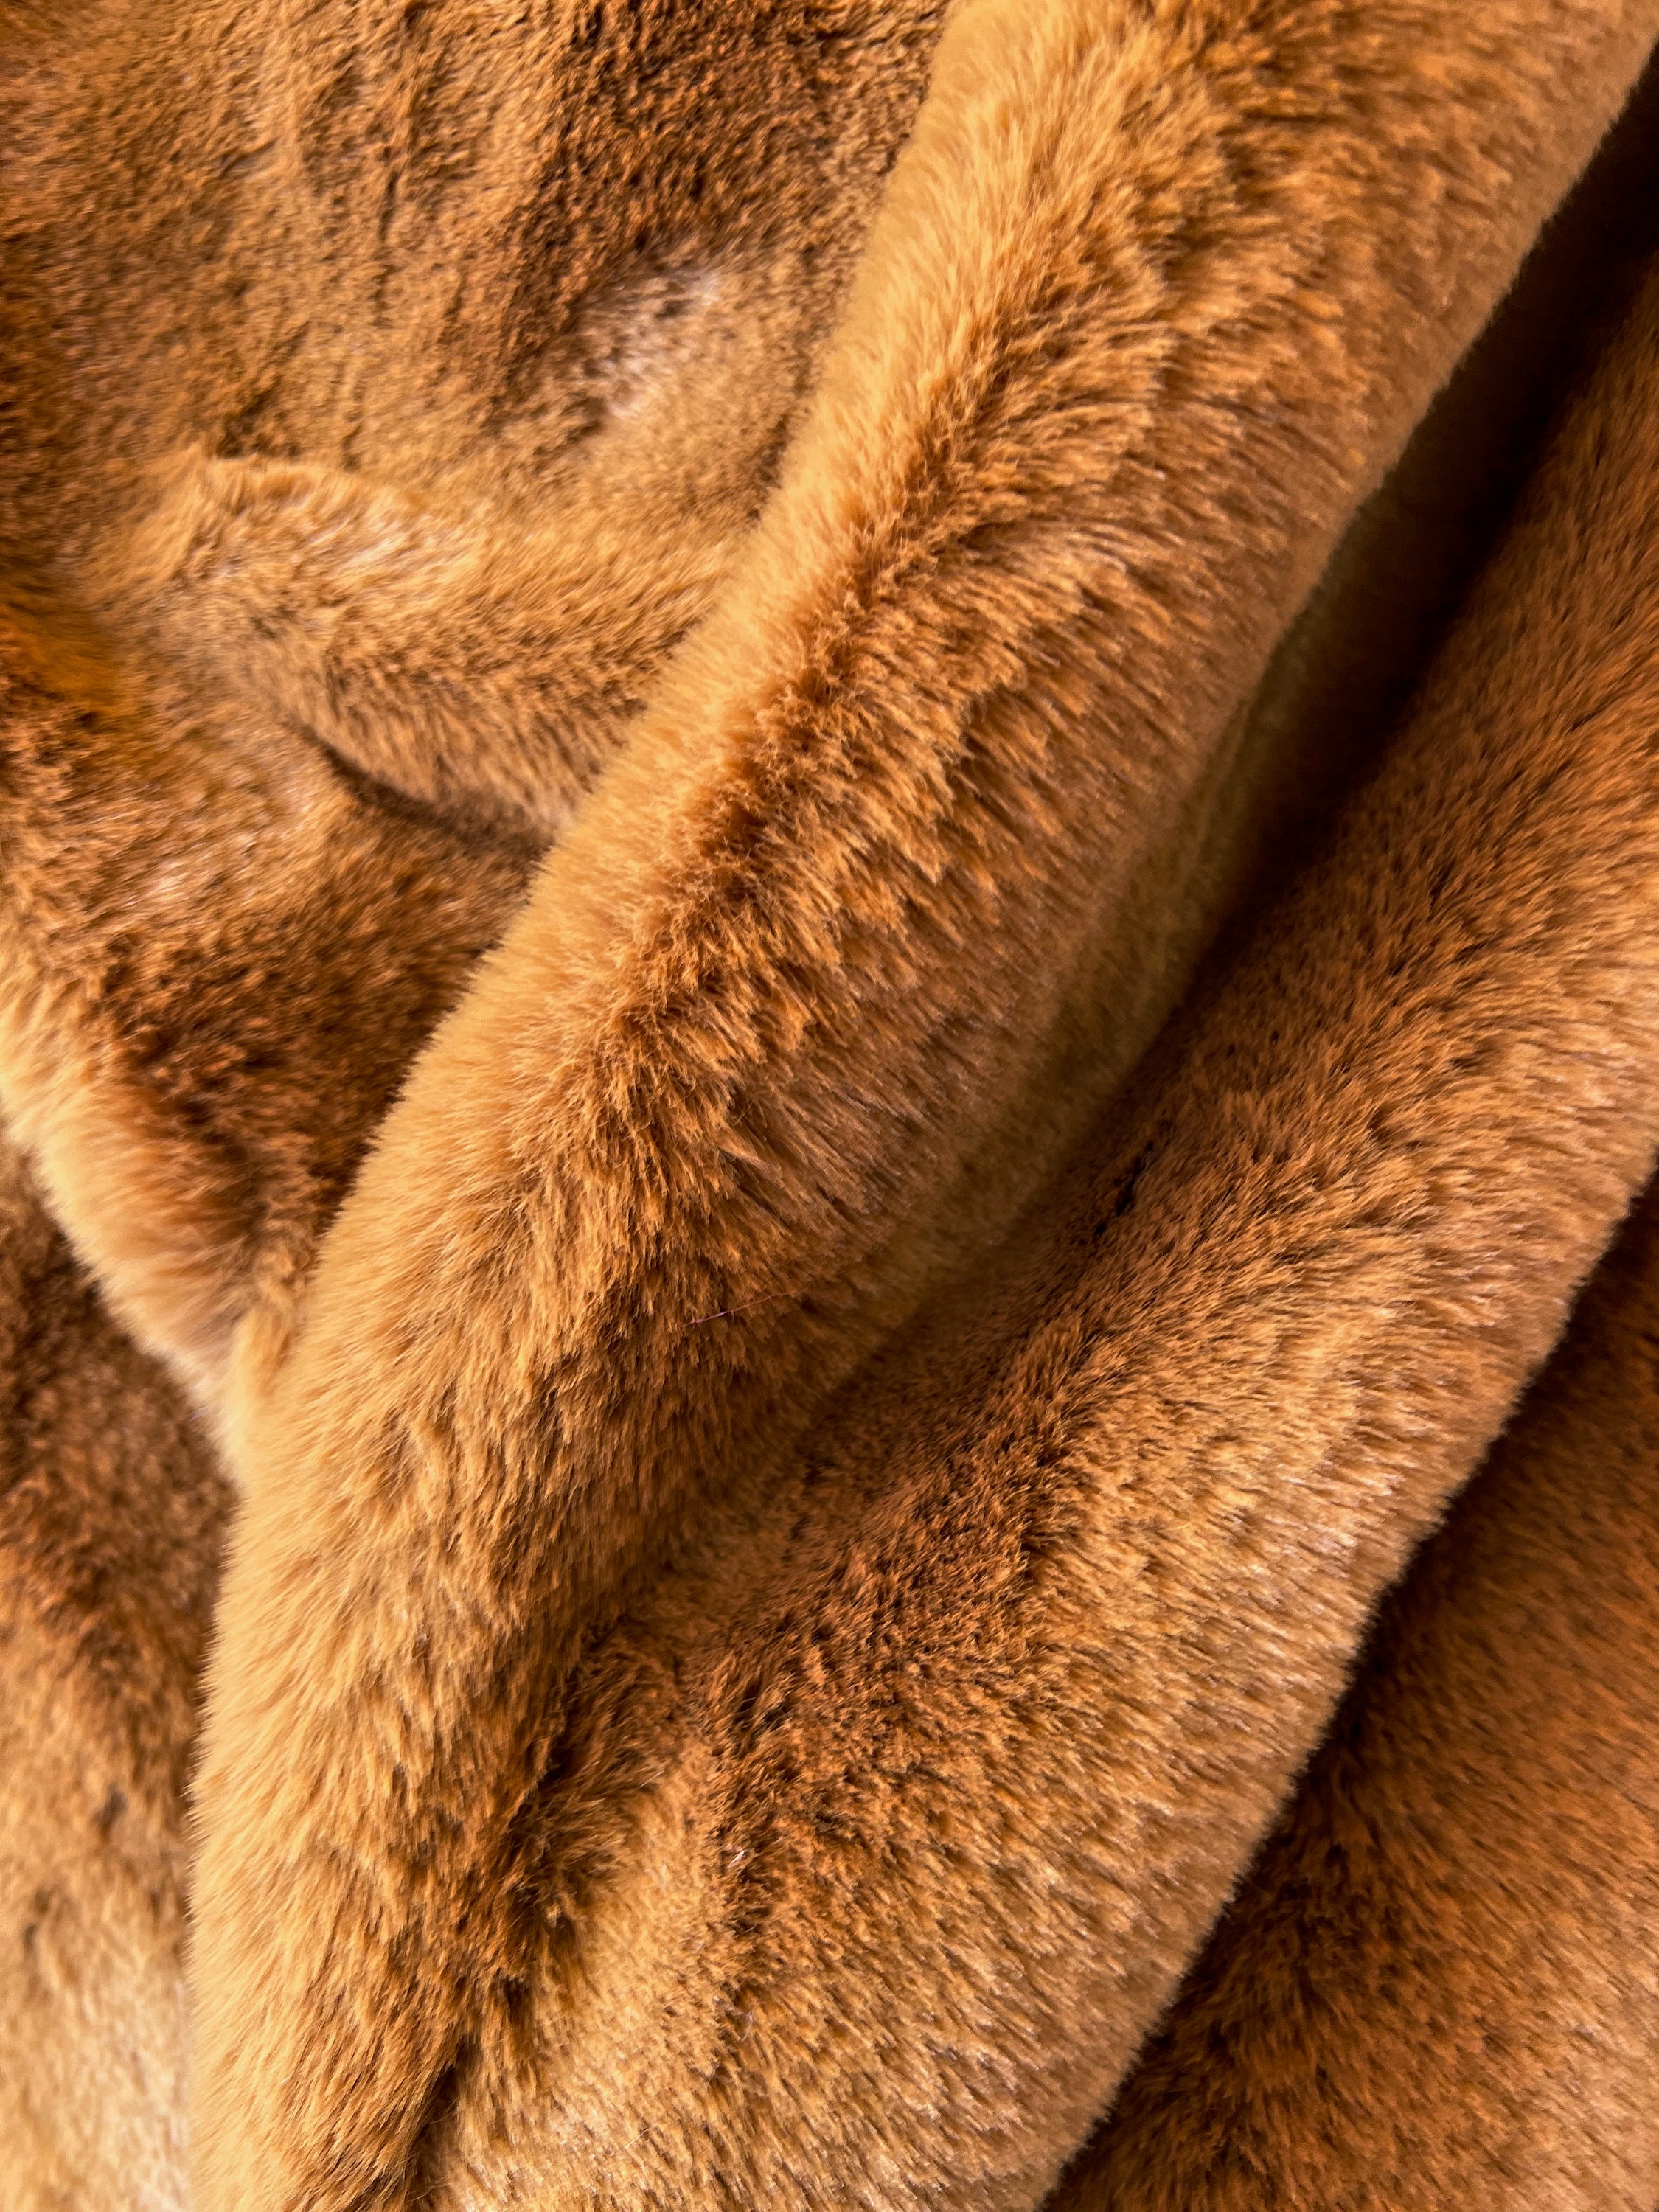 Sienna Brown Luxury Shag Faux Fur | Howl Fabric